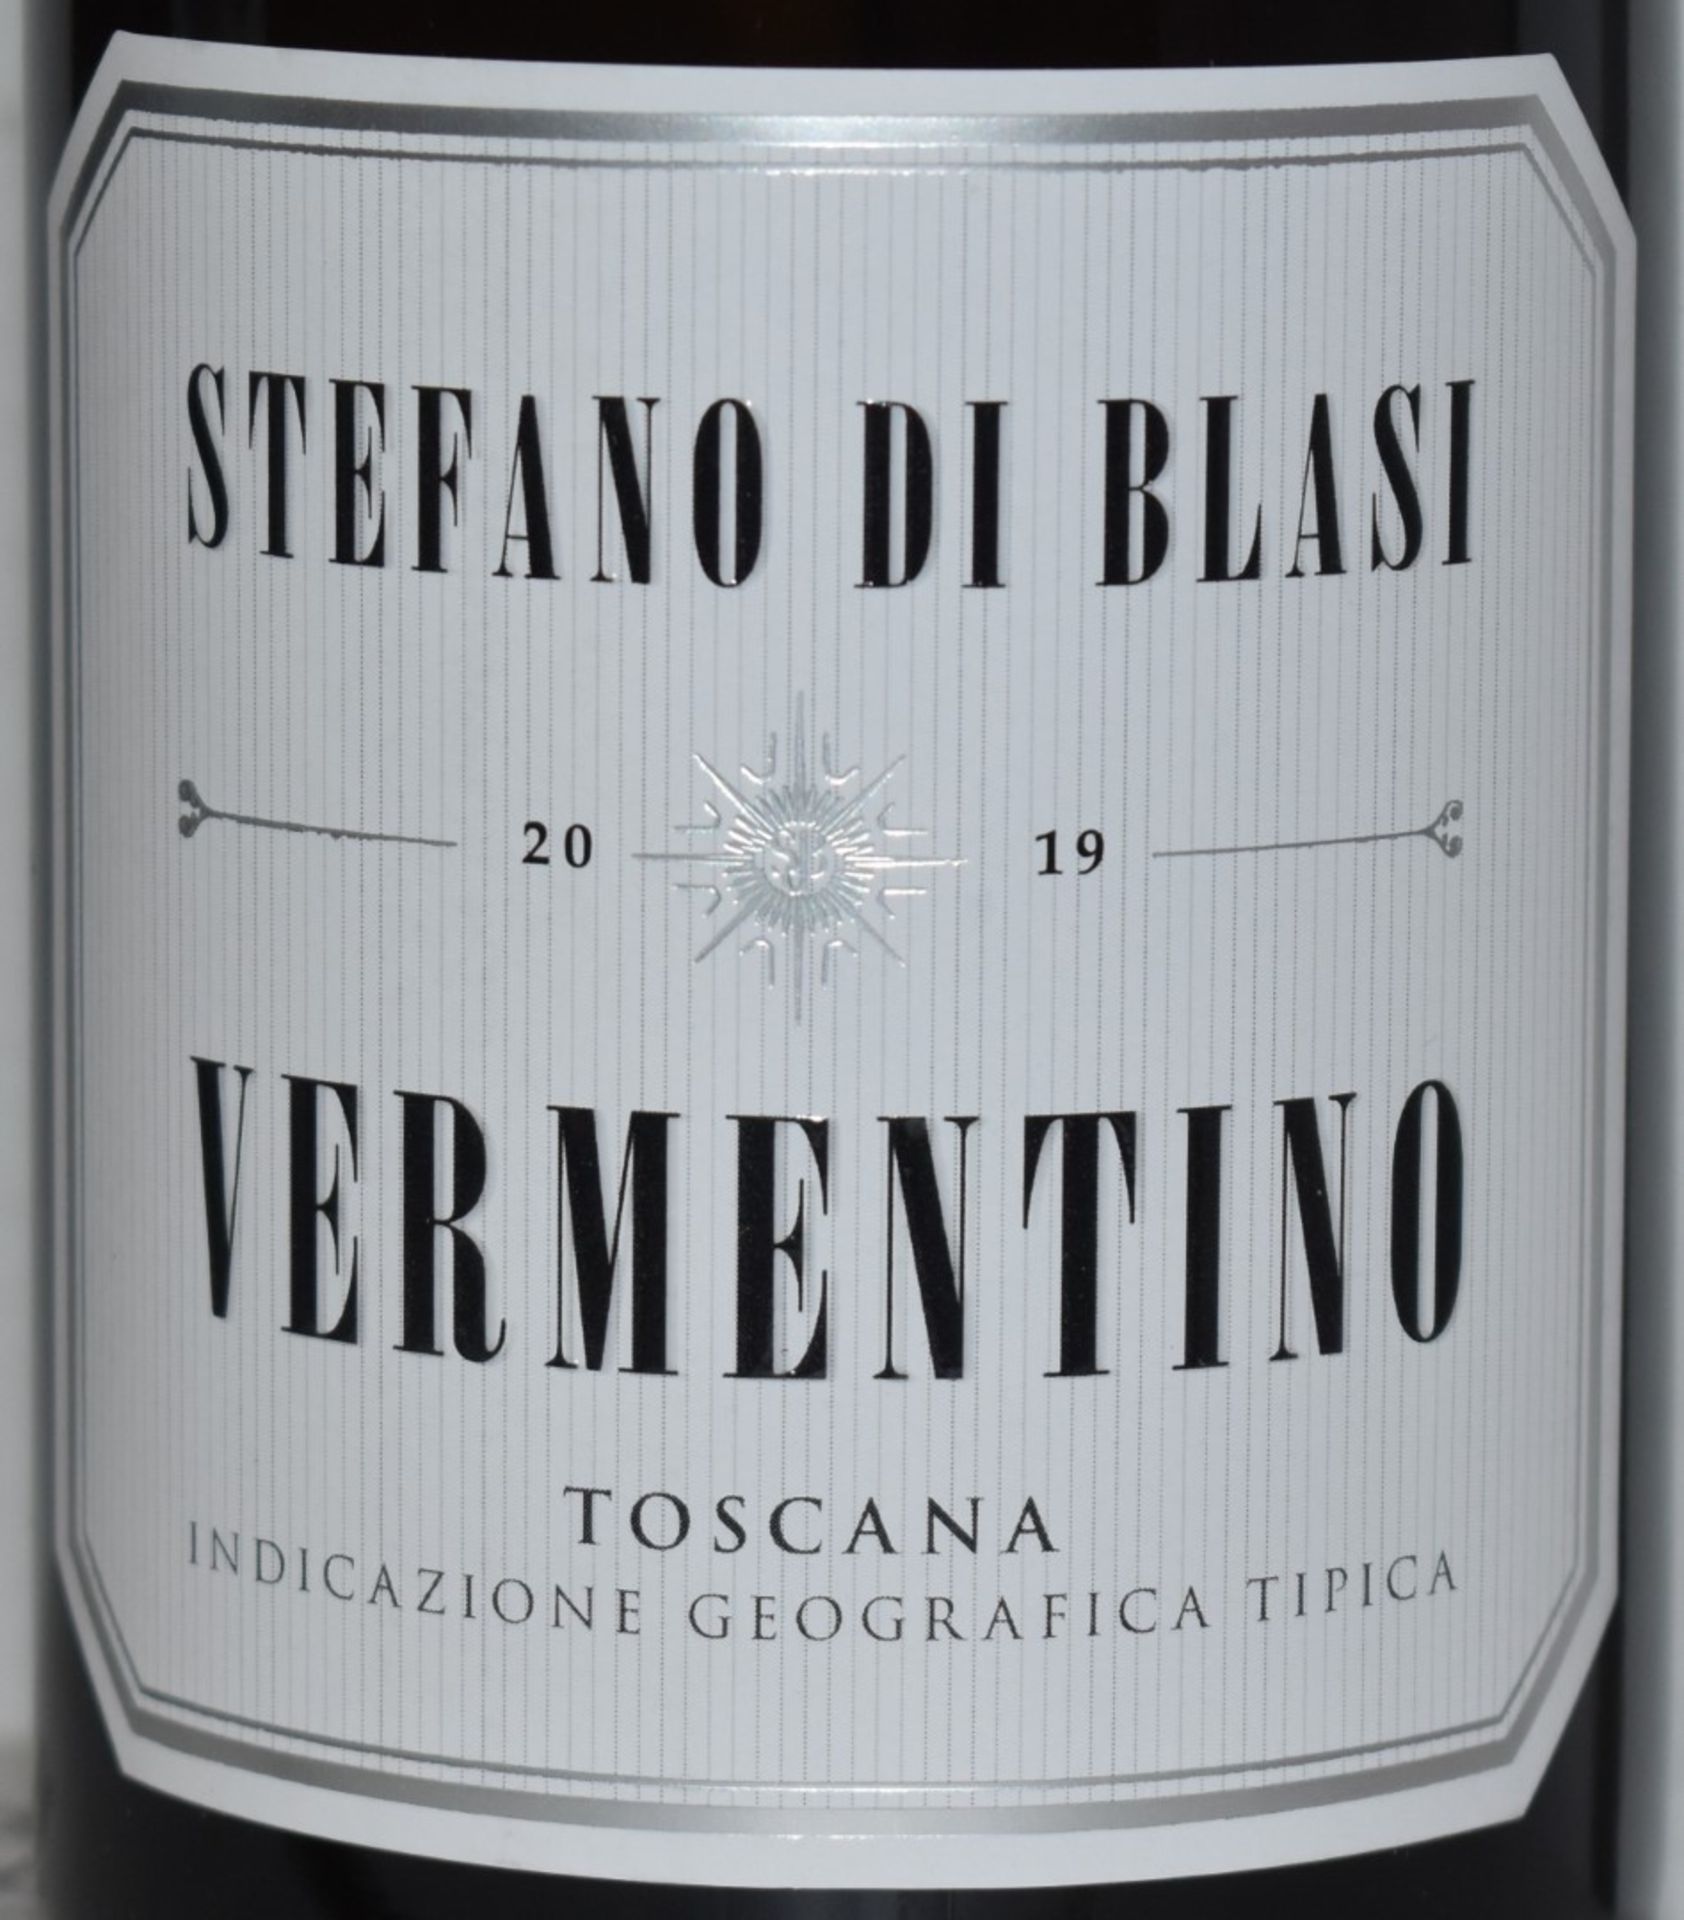 12 x Bottles of Stefano Di Blasi 2019 Vermentino Toscana 13.5% Wine - 750ml Bottles - Drink Until - Image 2 of 7